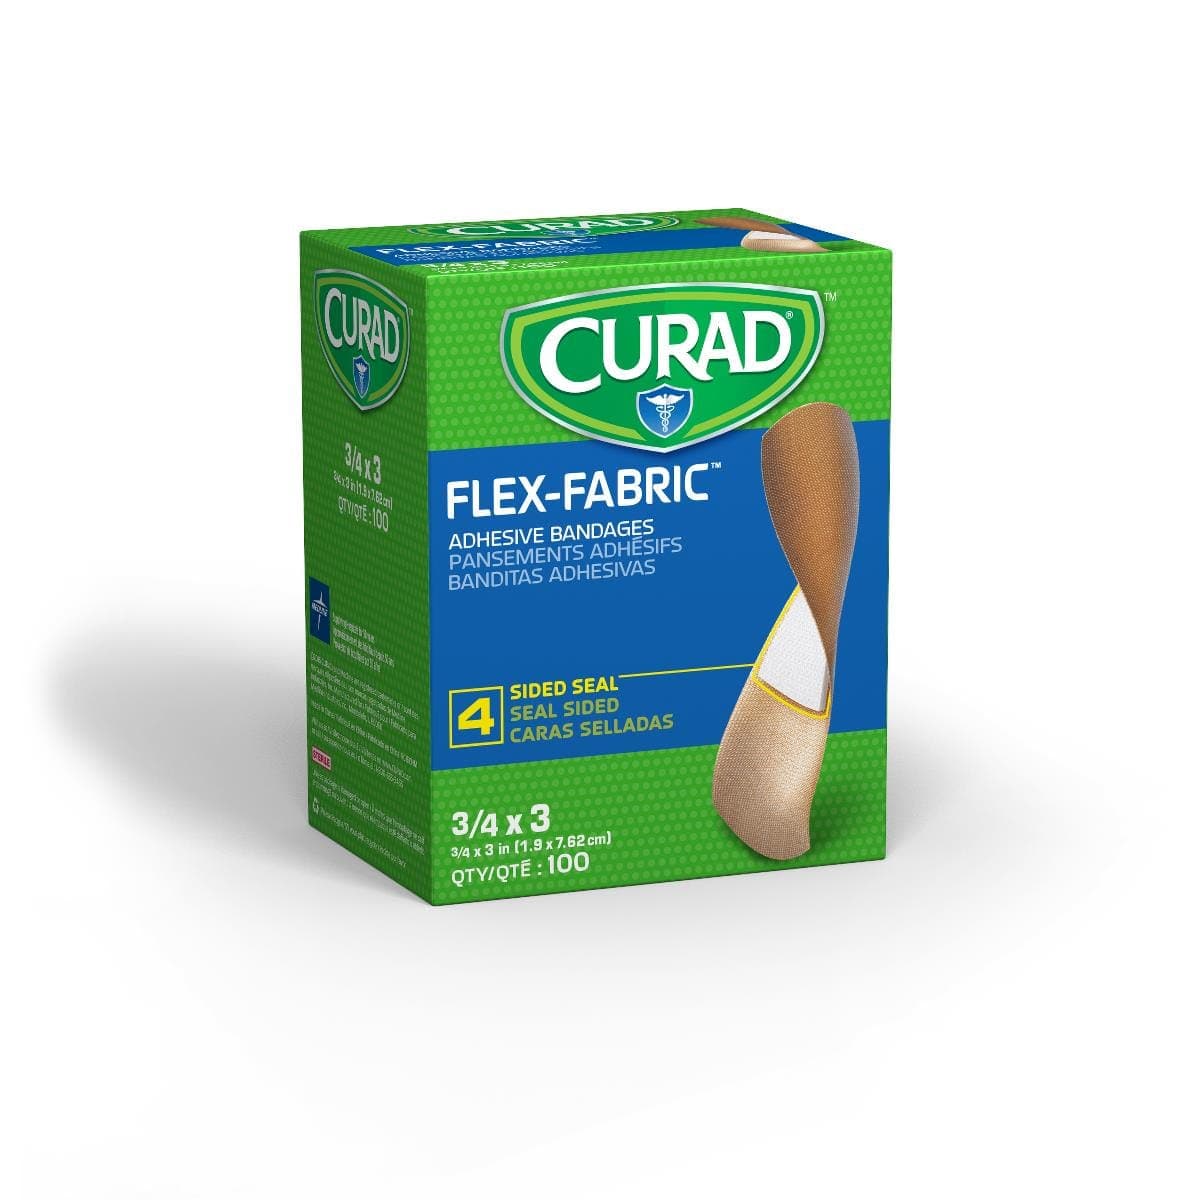 Medline Bulk / Case of 8100 Medline CURAD Flex-Fabric Adhesive Bandages